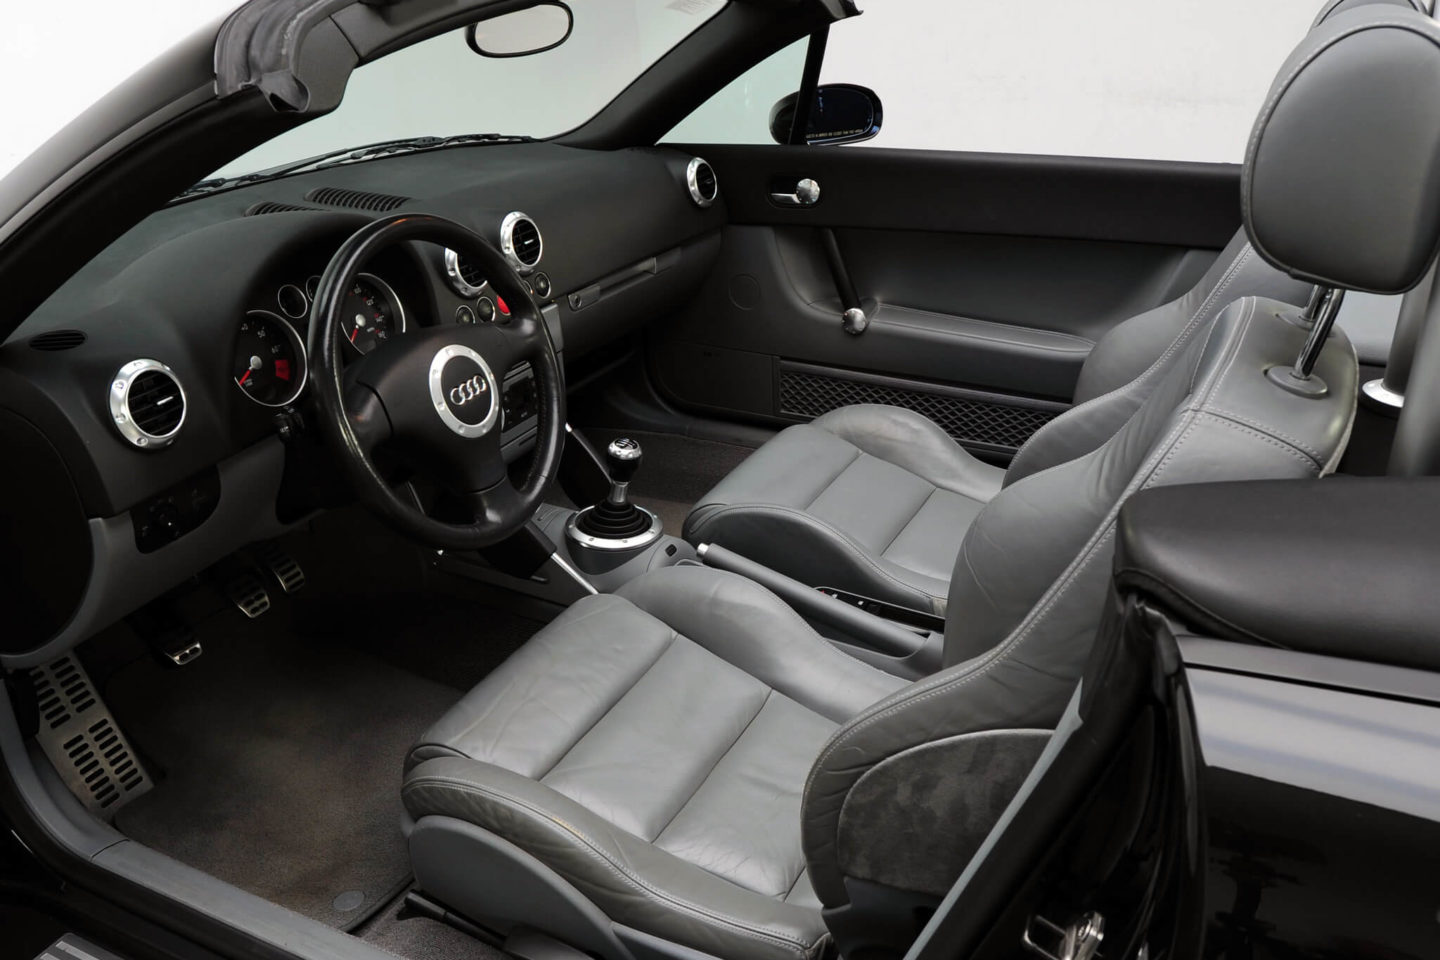 Audi TT Roadster interior